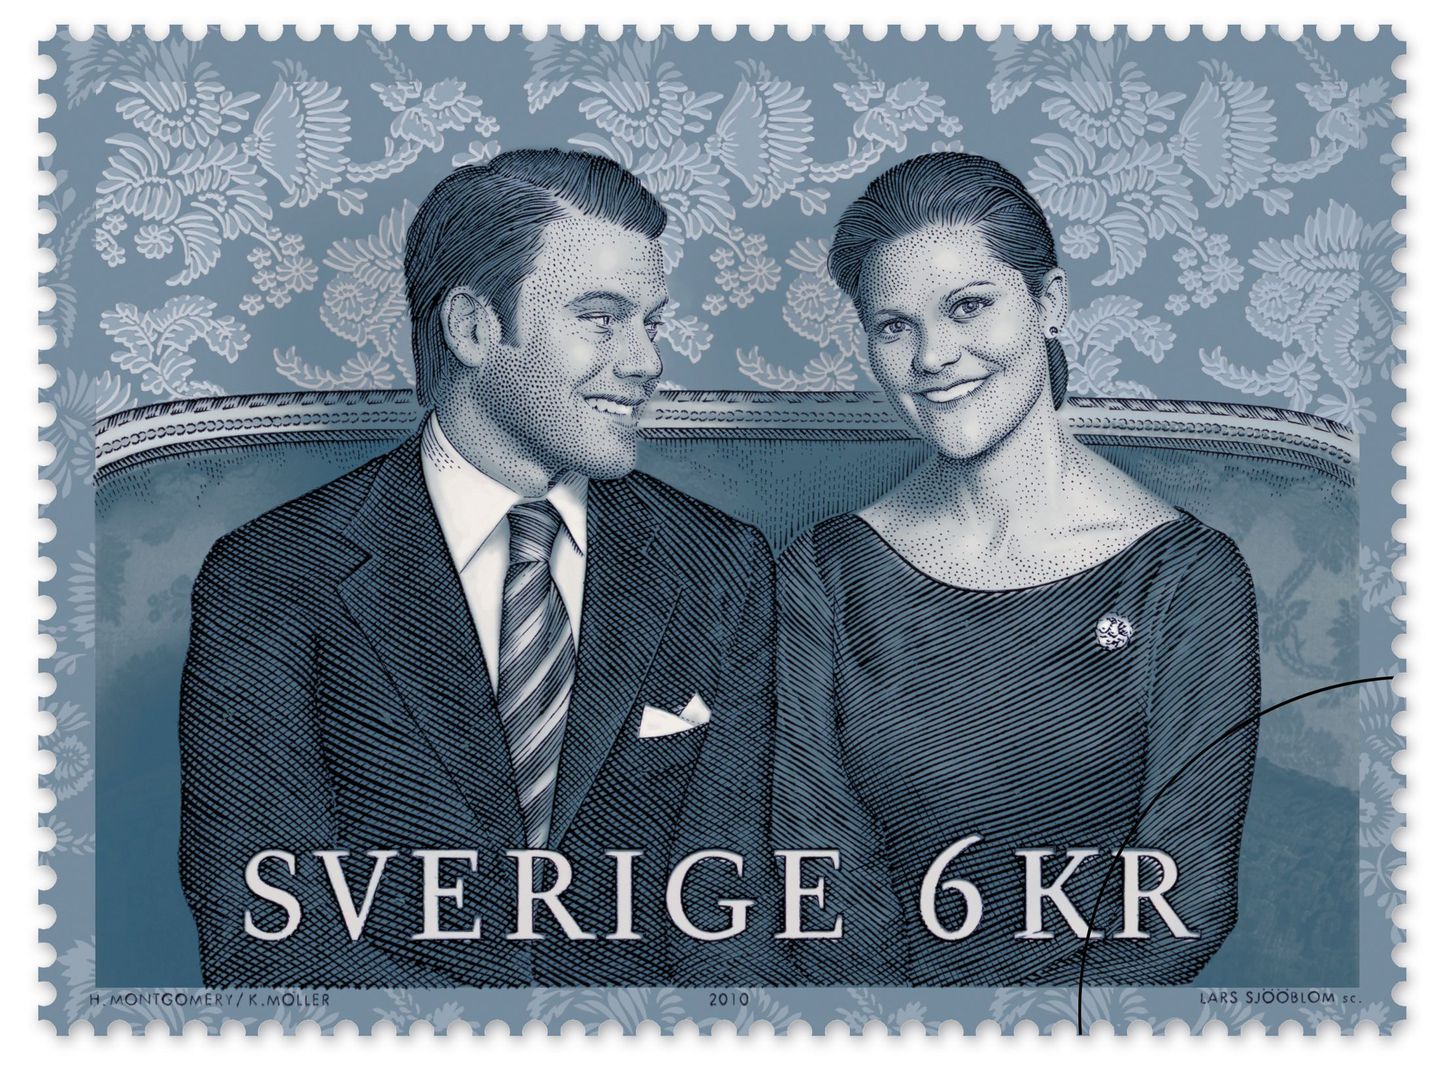 Rootsi koroonprintsess Victoria ja ta kihlatu Daniel Westling margil